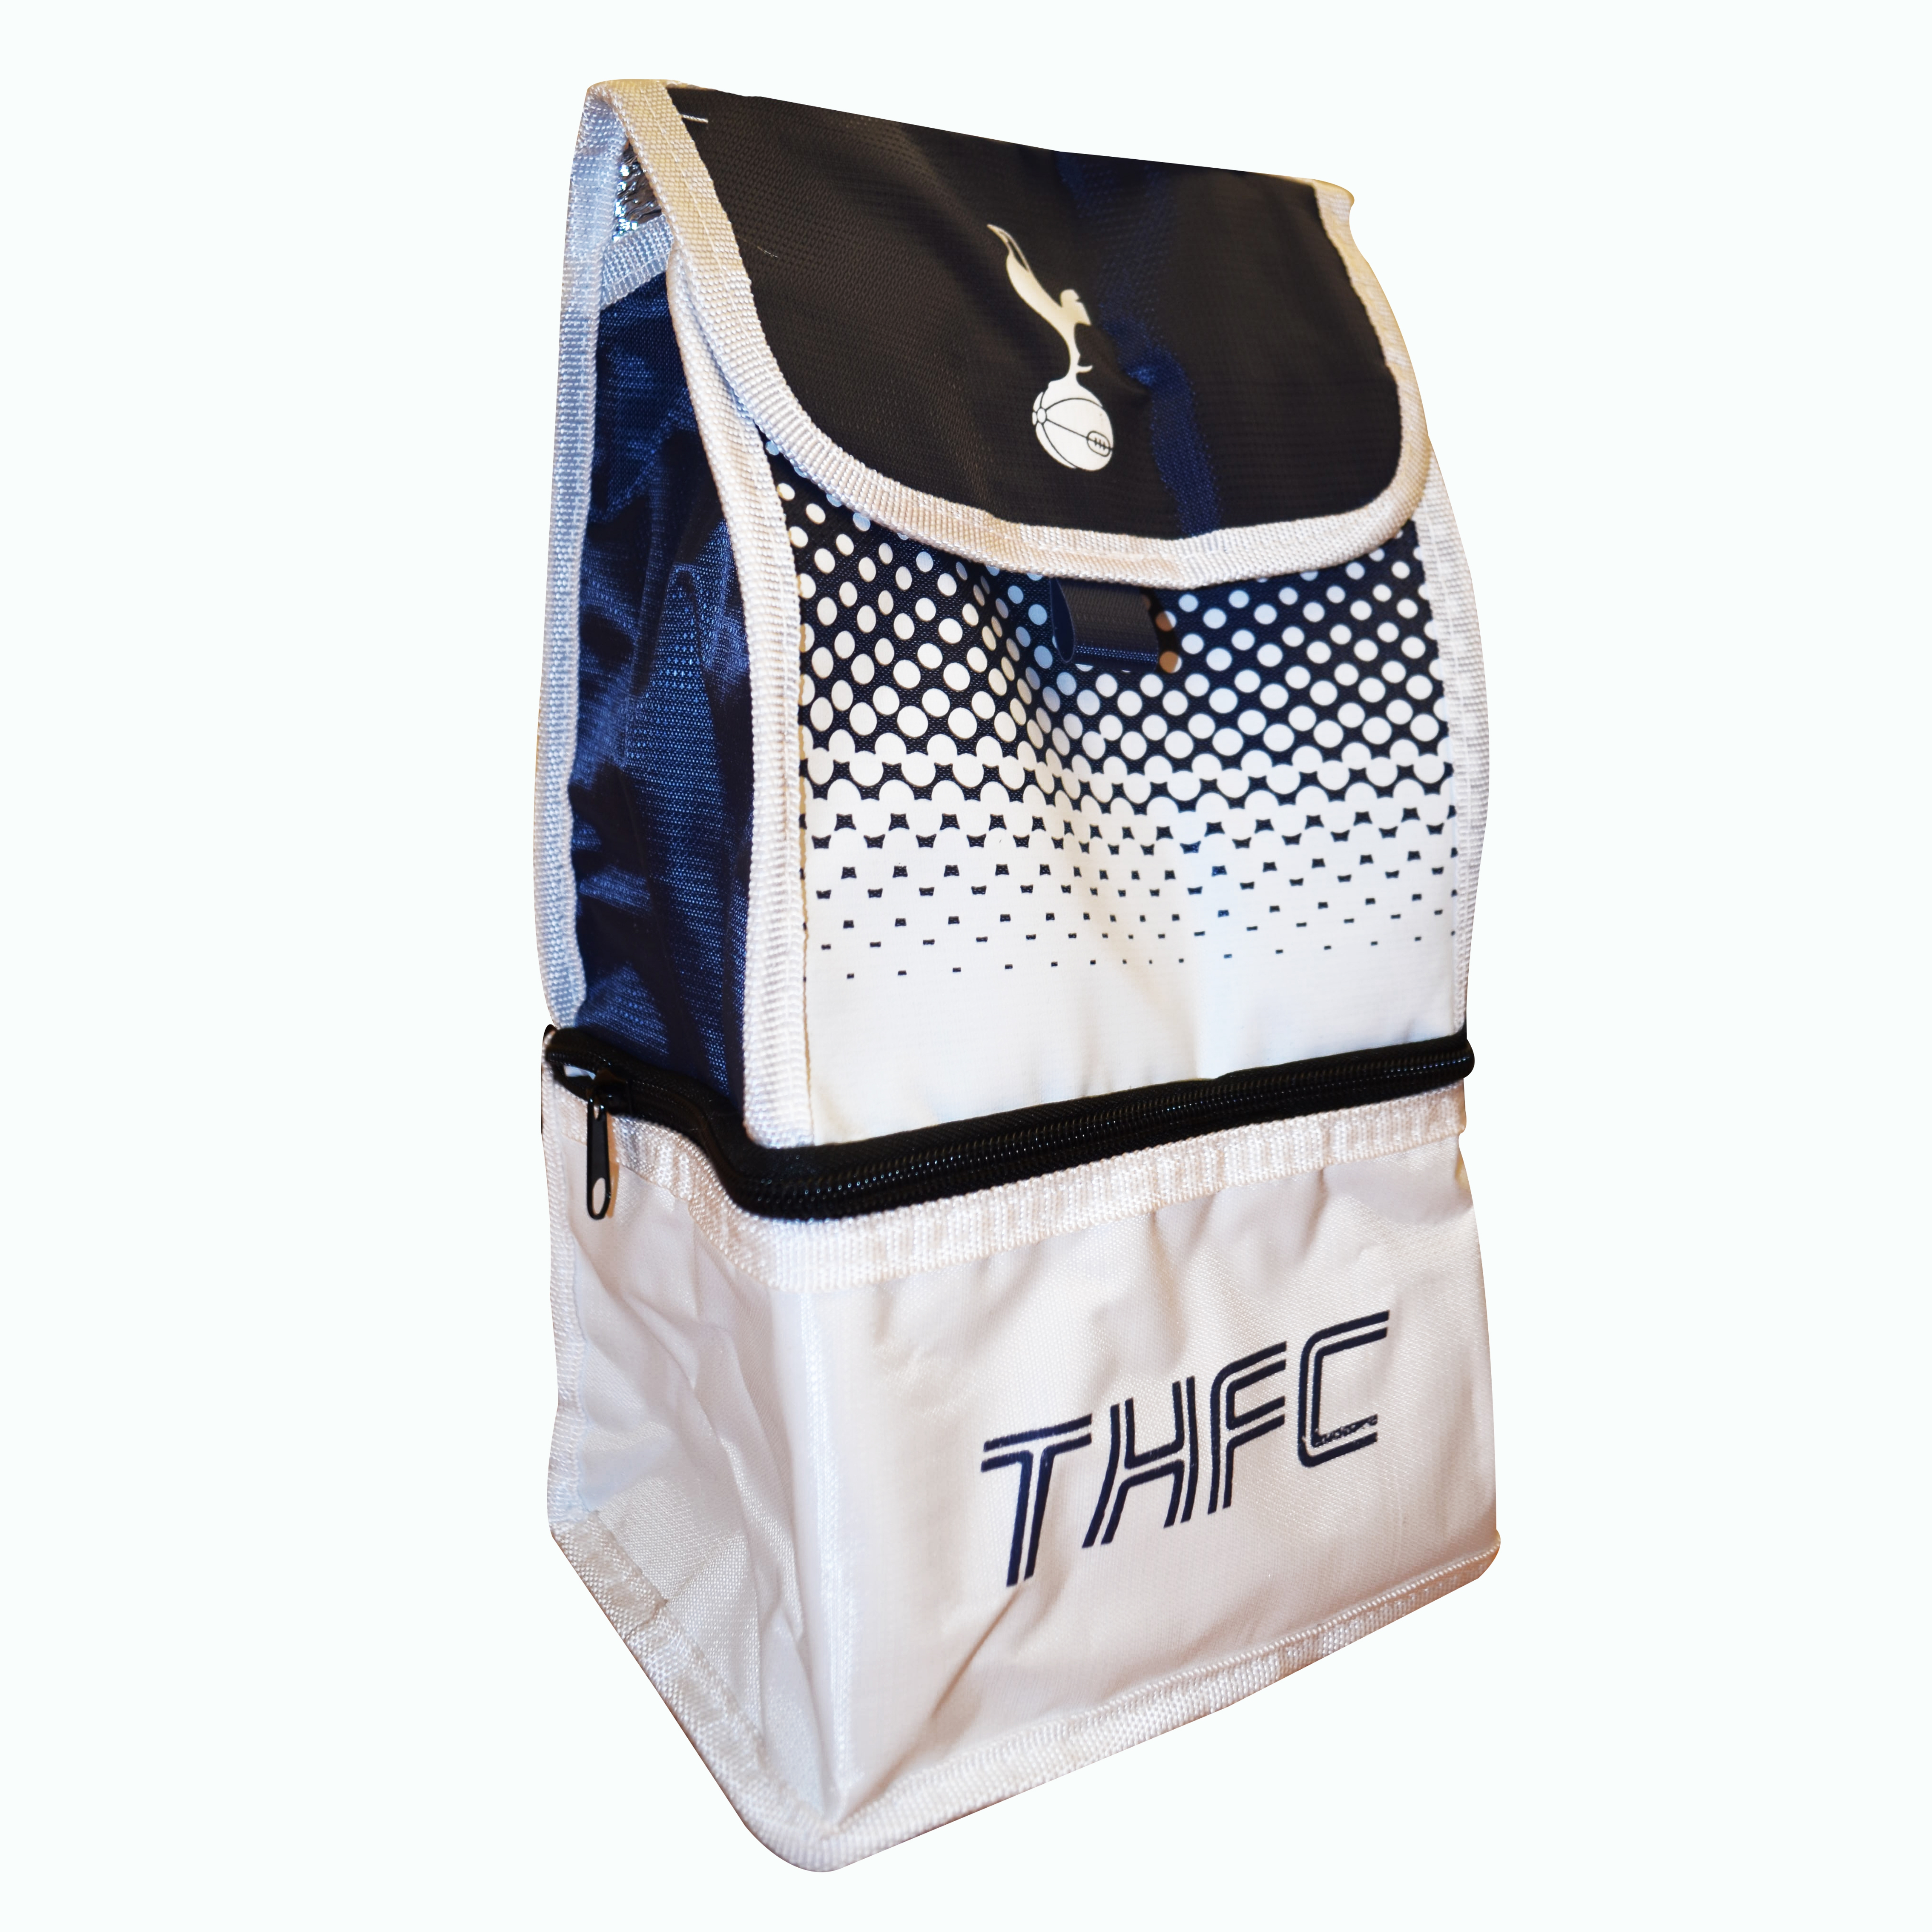 Tottenham Hotspur Fc 'Fade' Dual Compartment Football Premium Lunch Bag Official